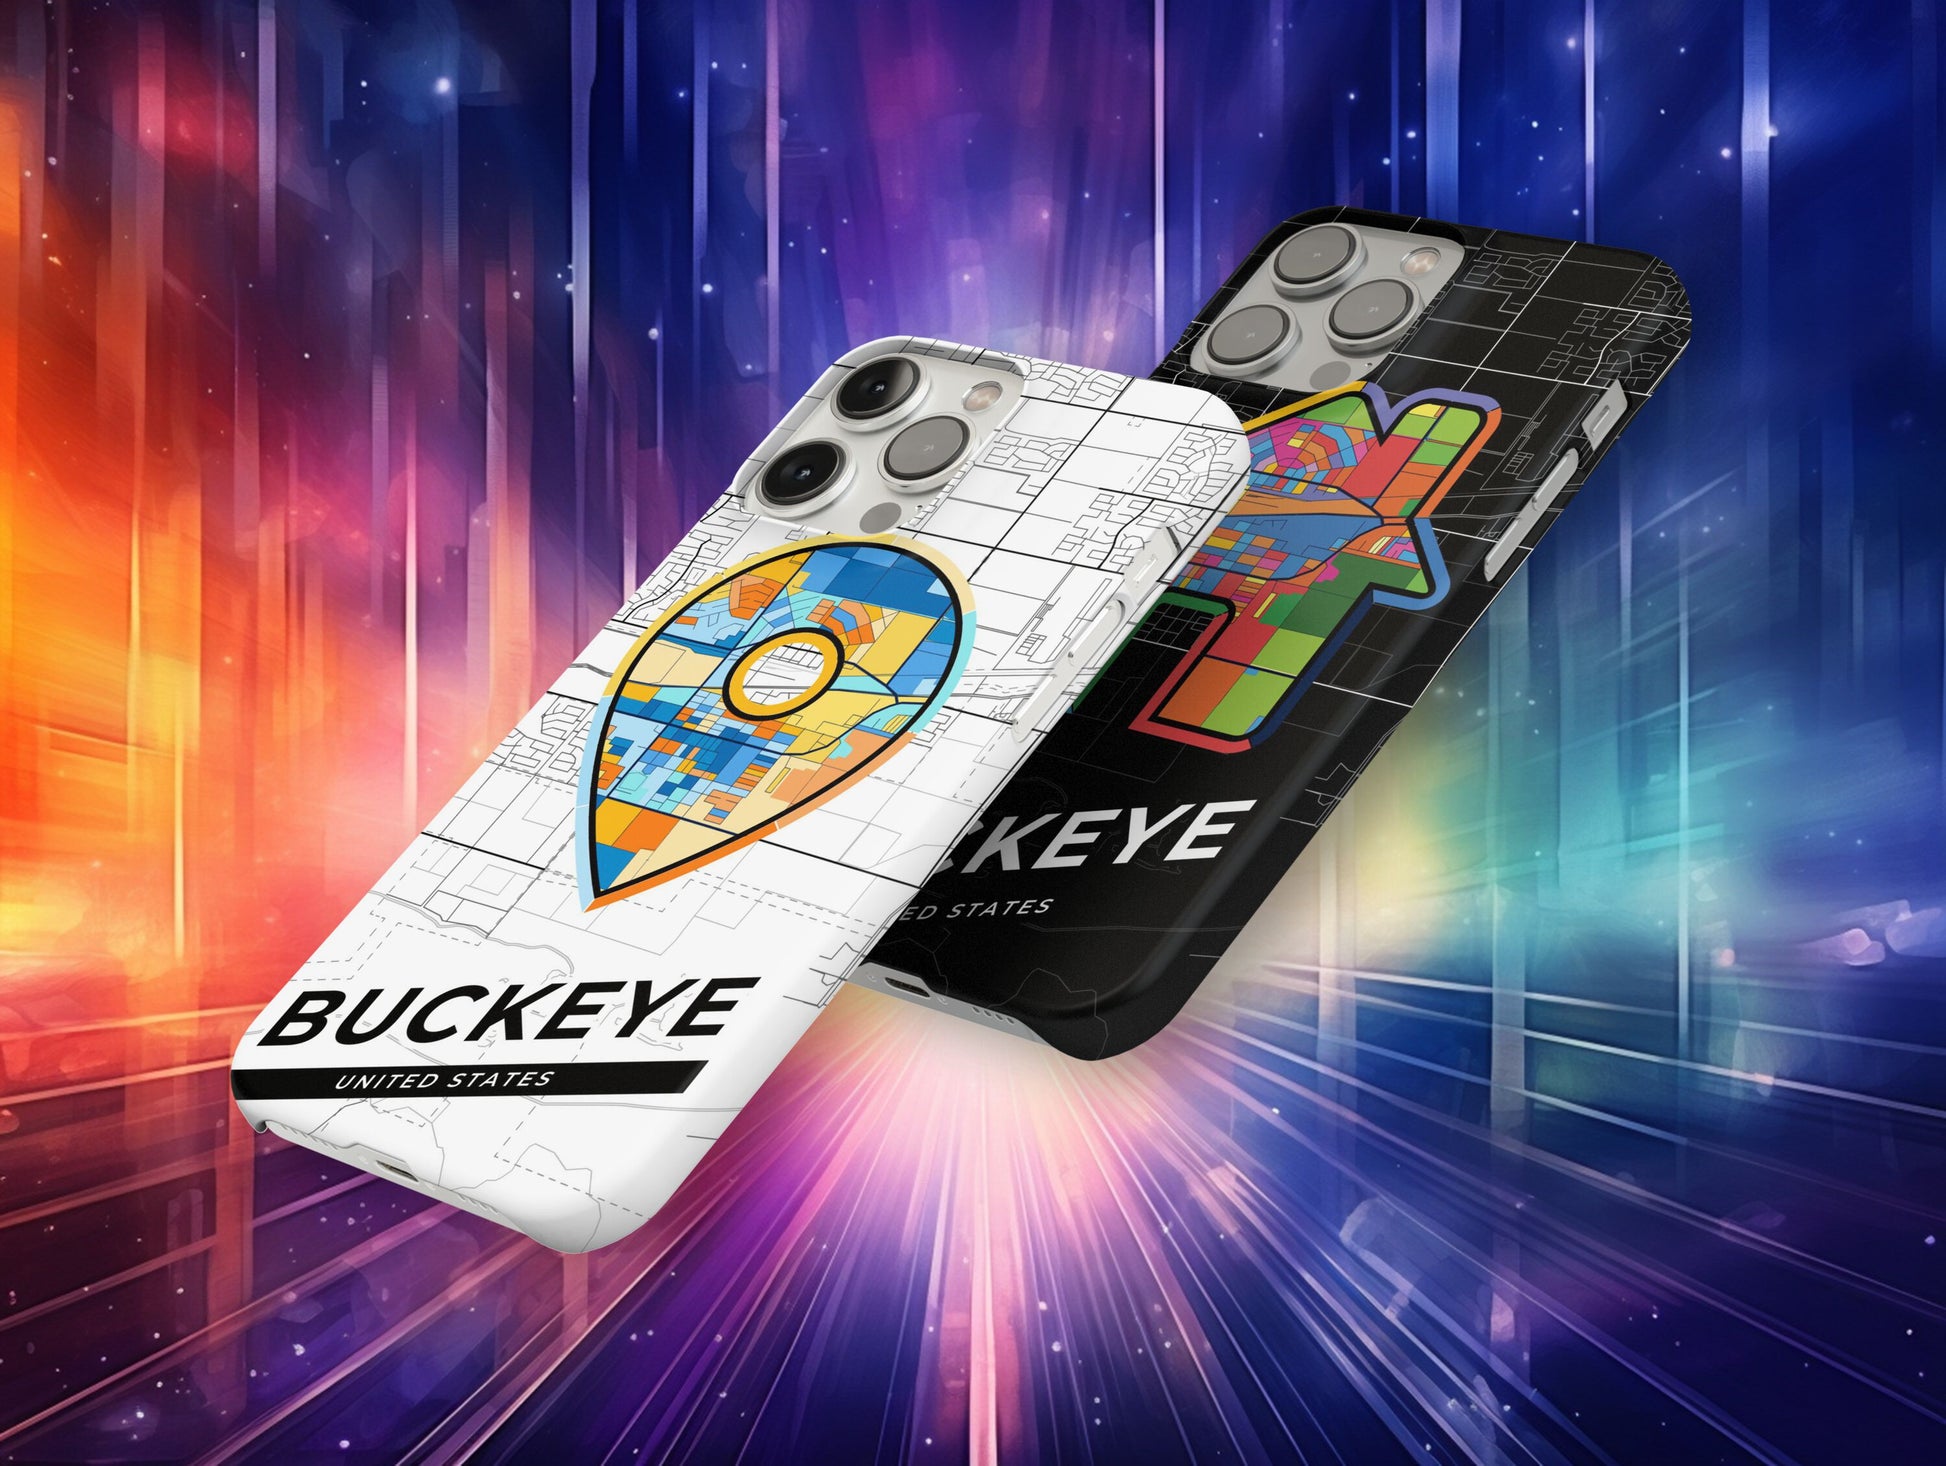 Buckeye Arizona slim phone case with colorful icon. Birthday, wedding or housewarming gift. Couple match cases.